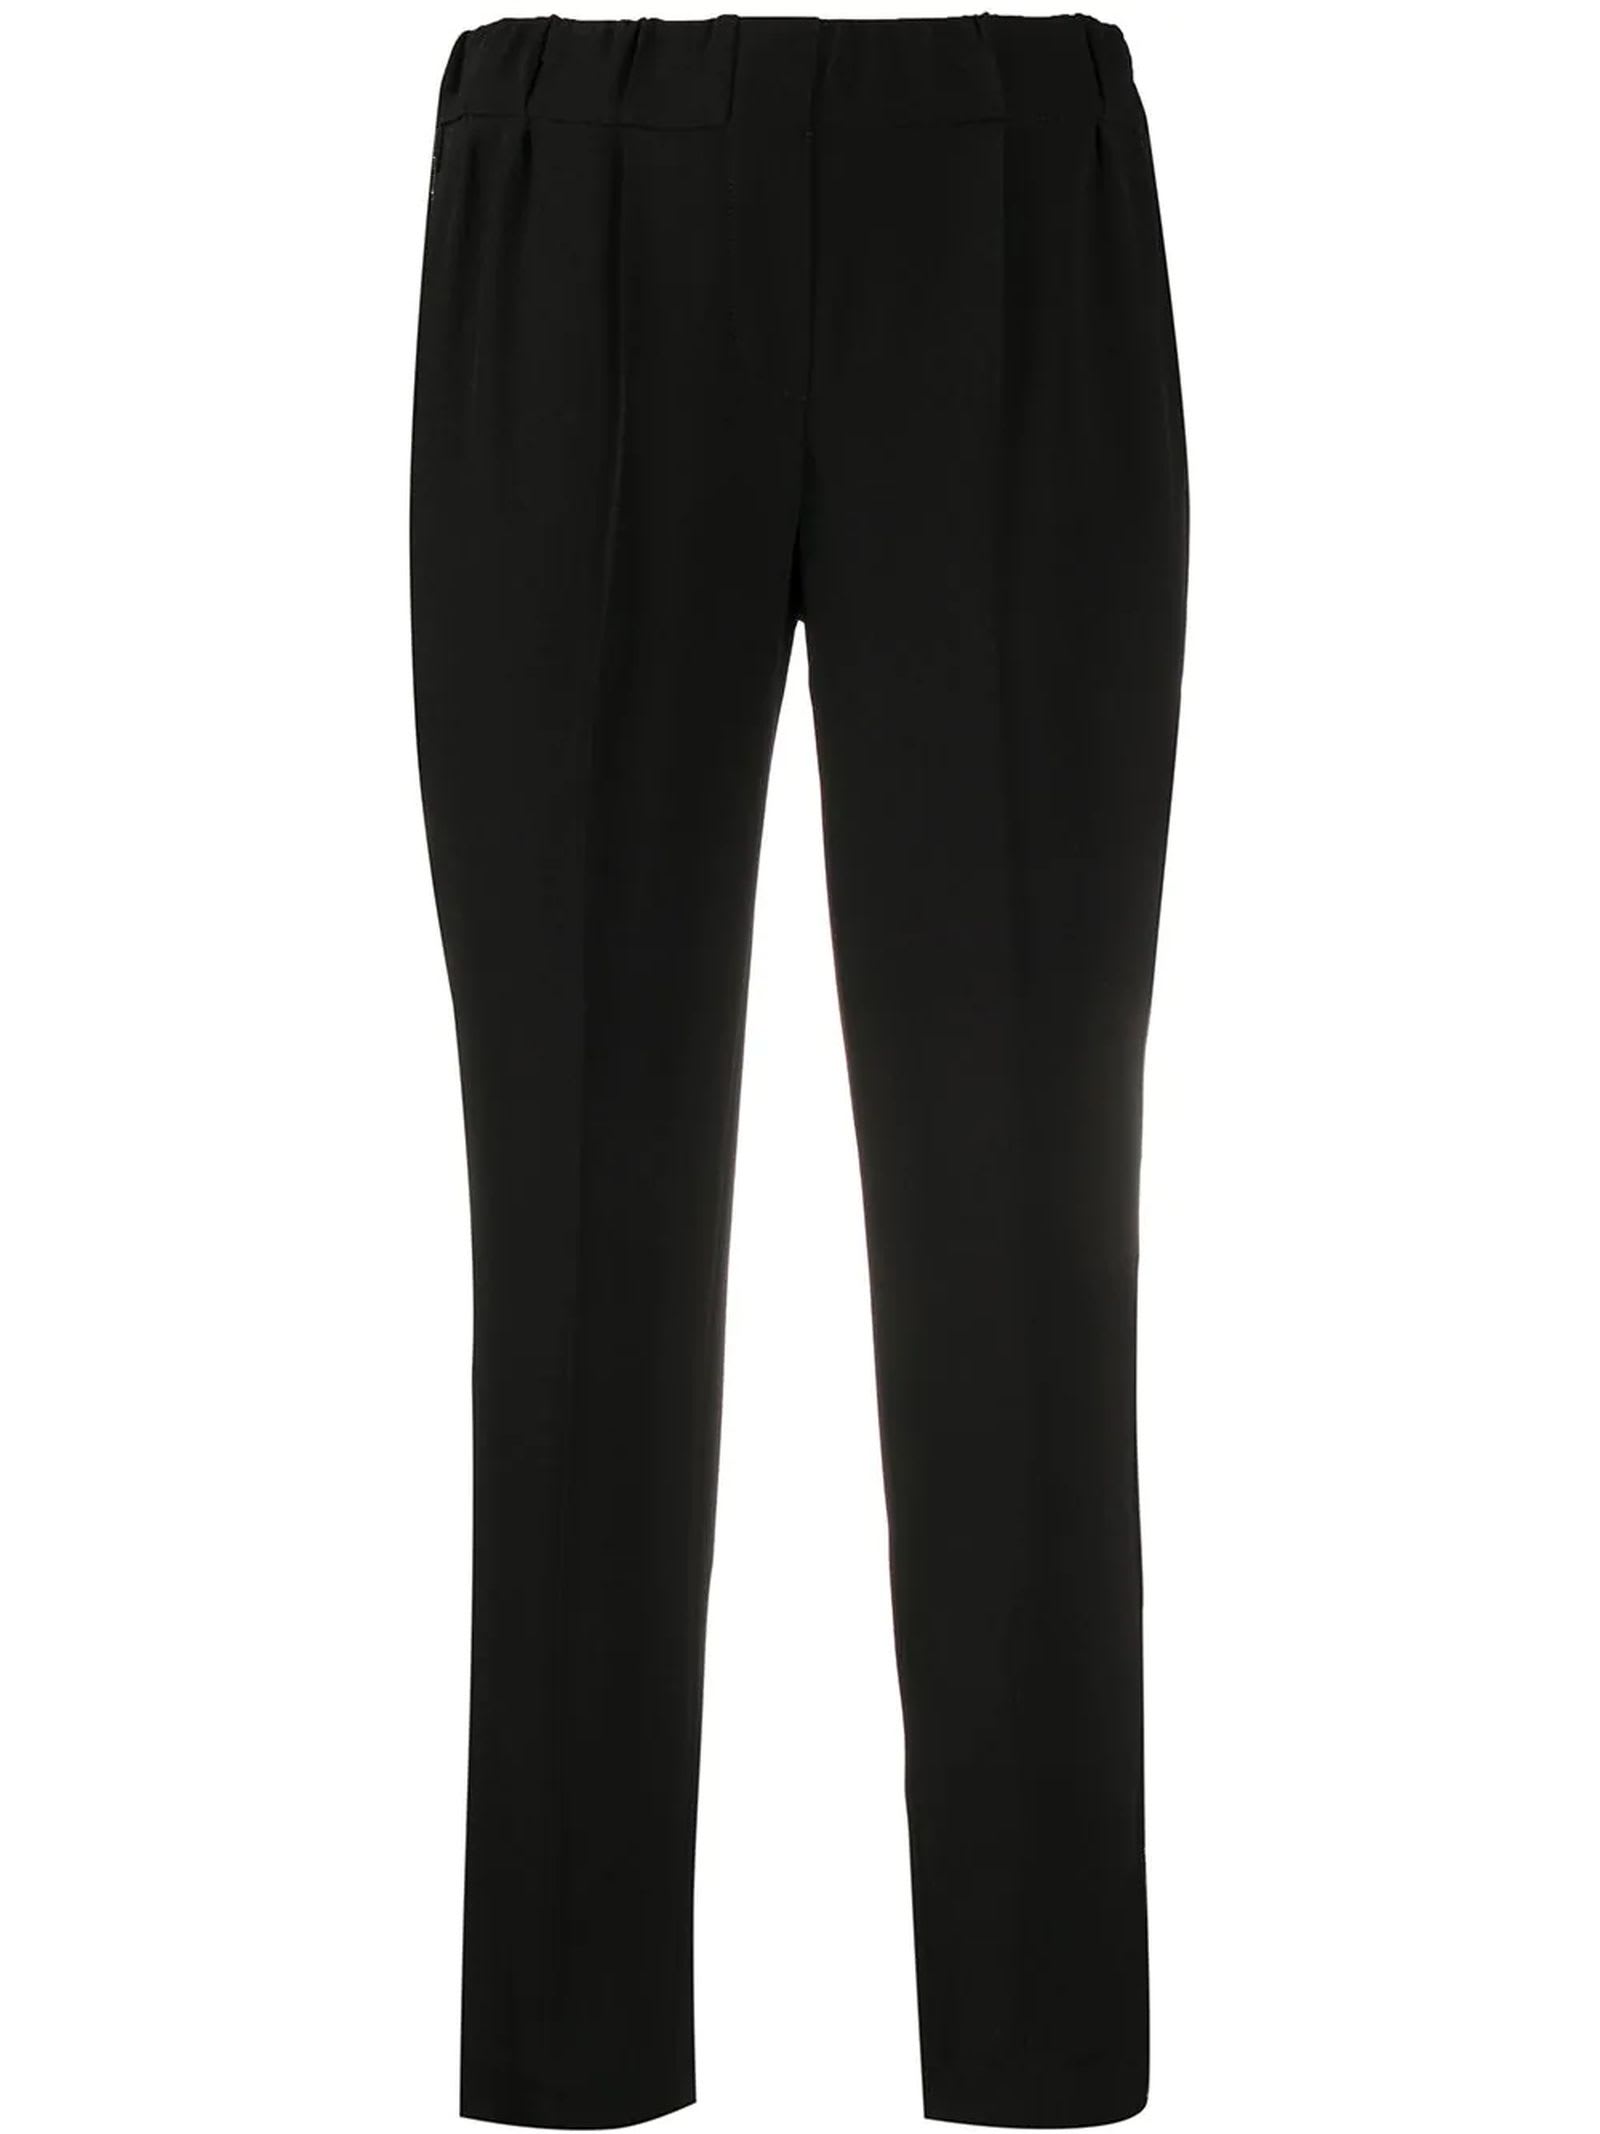 Brunello Cucinelli Black Silk Blend Trousers